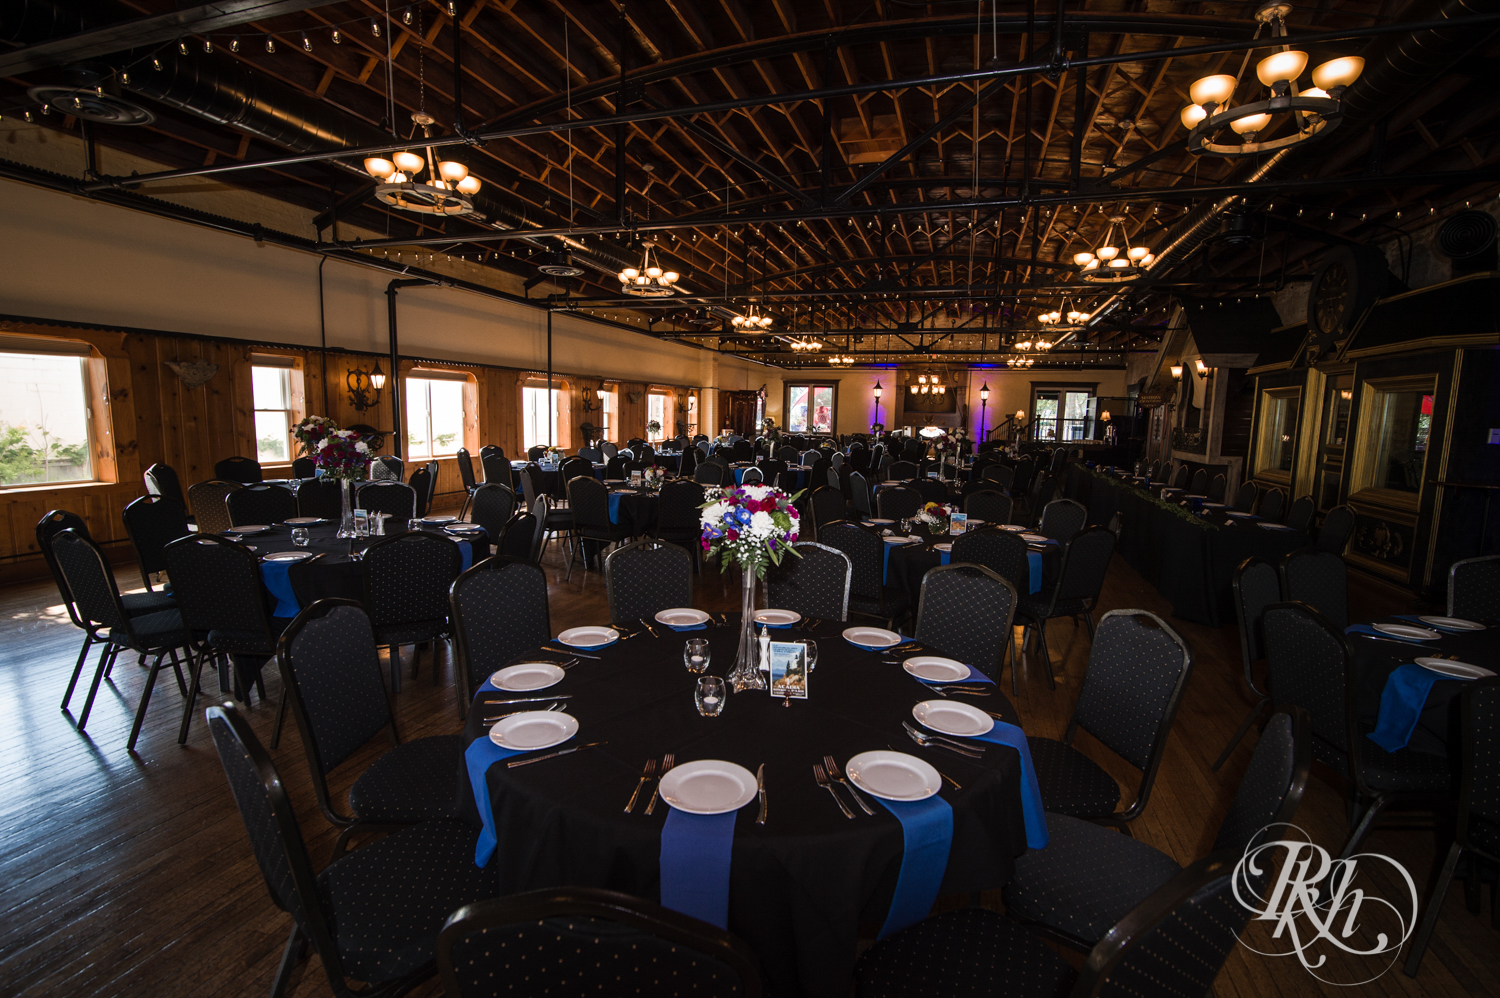 Indoor wedding reception at Kellerman's Event Center in White Bear Lake, Minnesota.